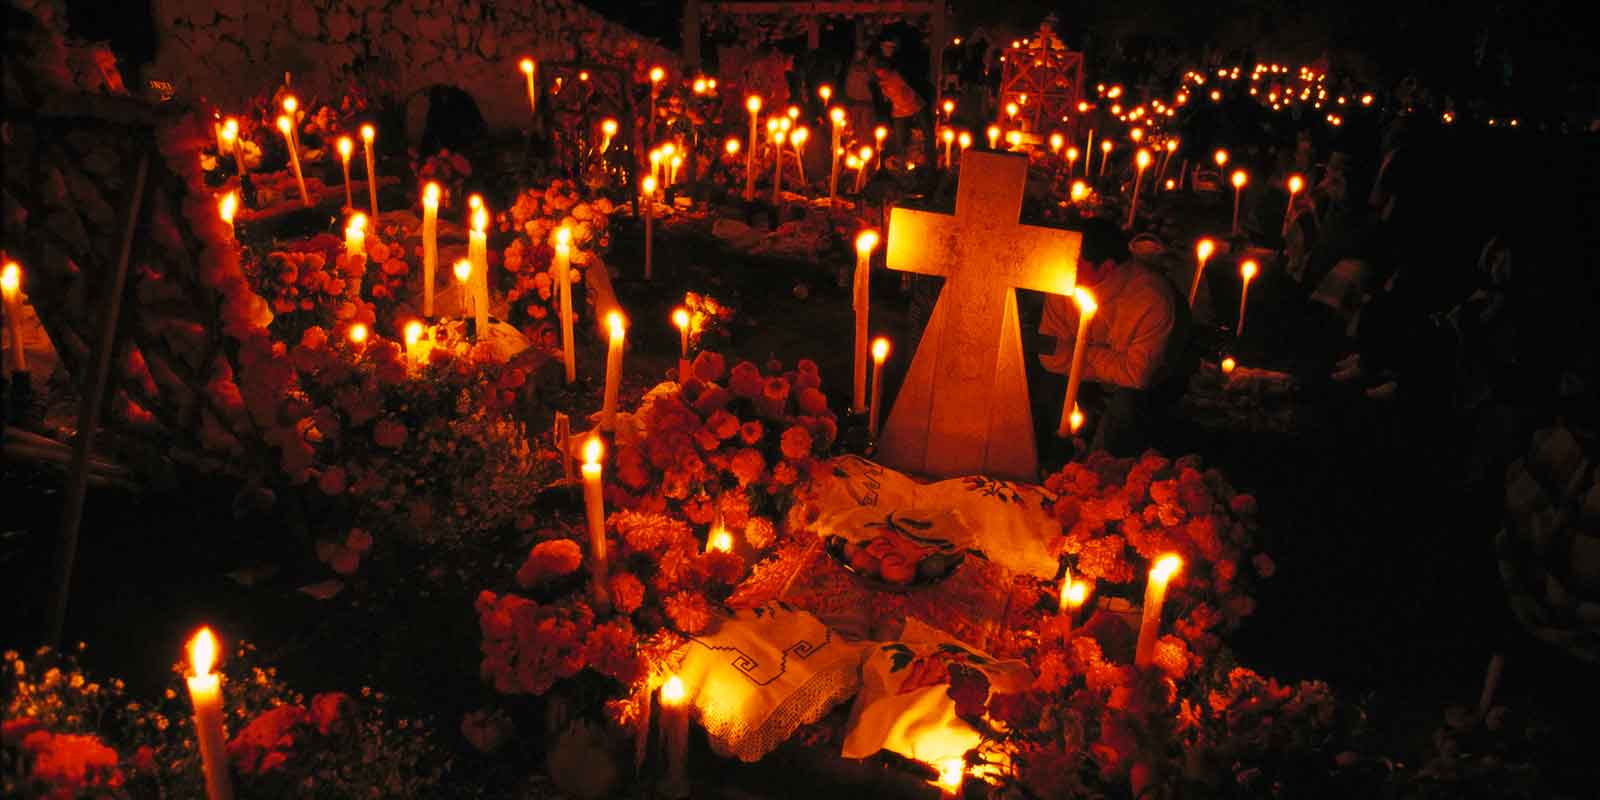 Candles throughout a cemetary during Día de los Muertos in Mexico.